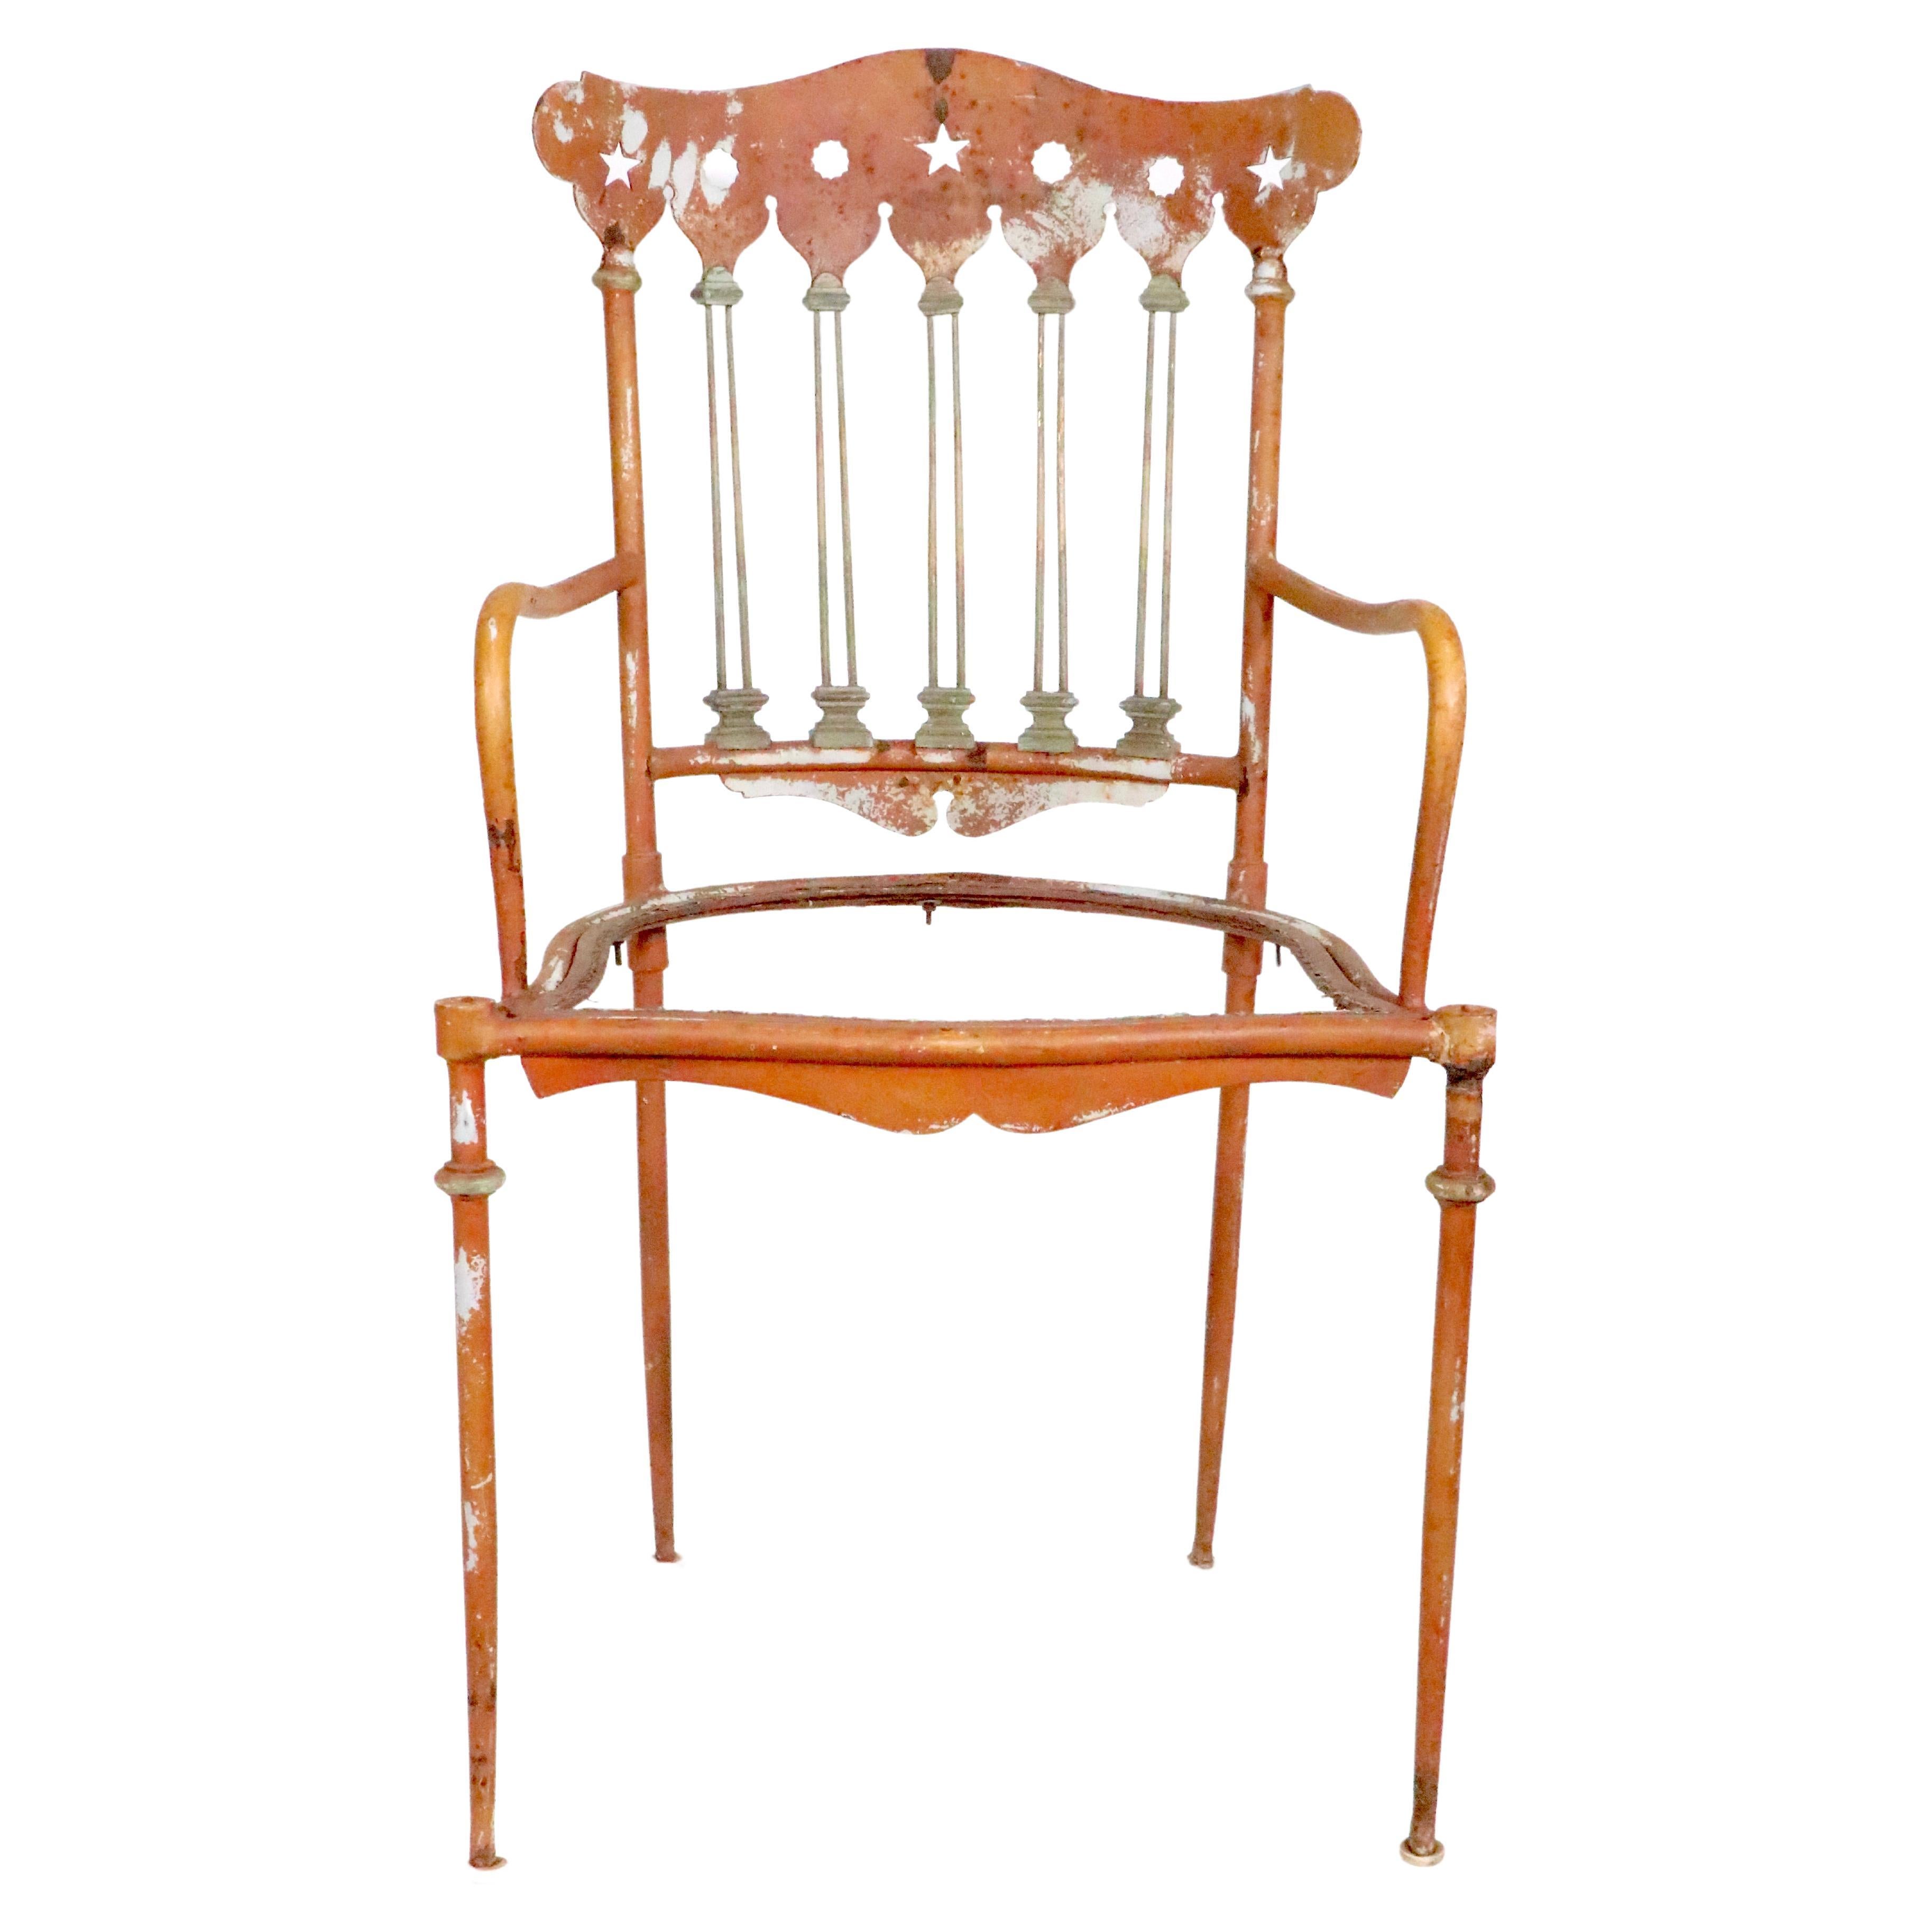   Decorative Antique Iron Brass and Steel Garden Patio Chair c 1900/1930's